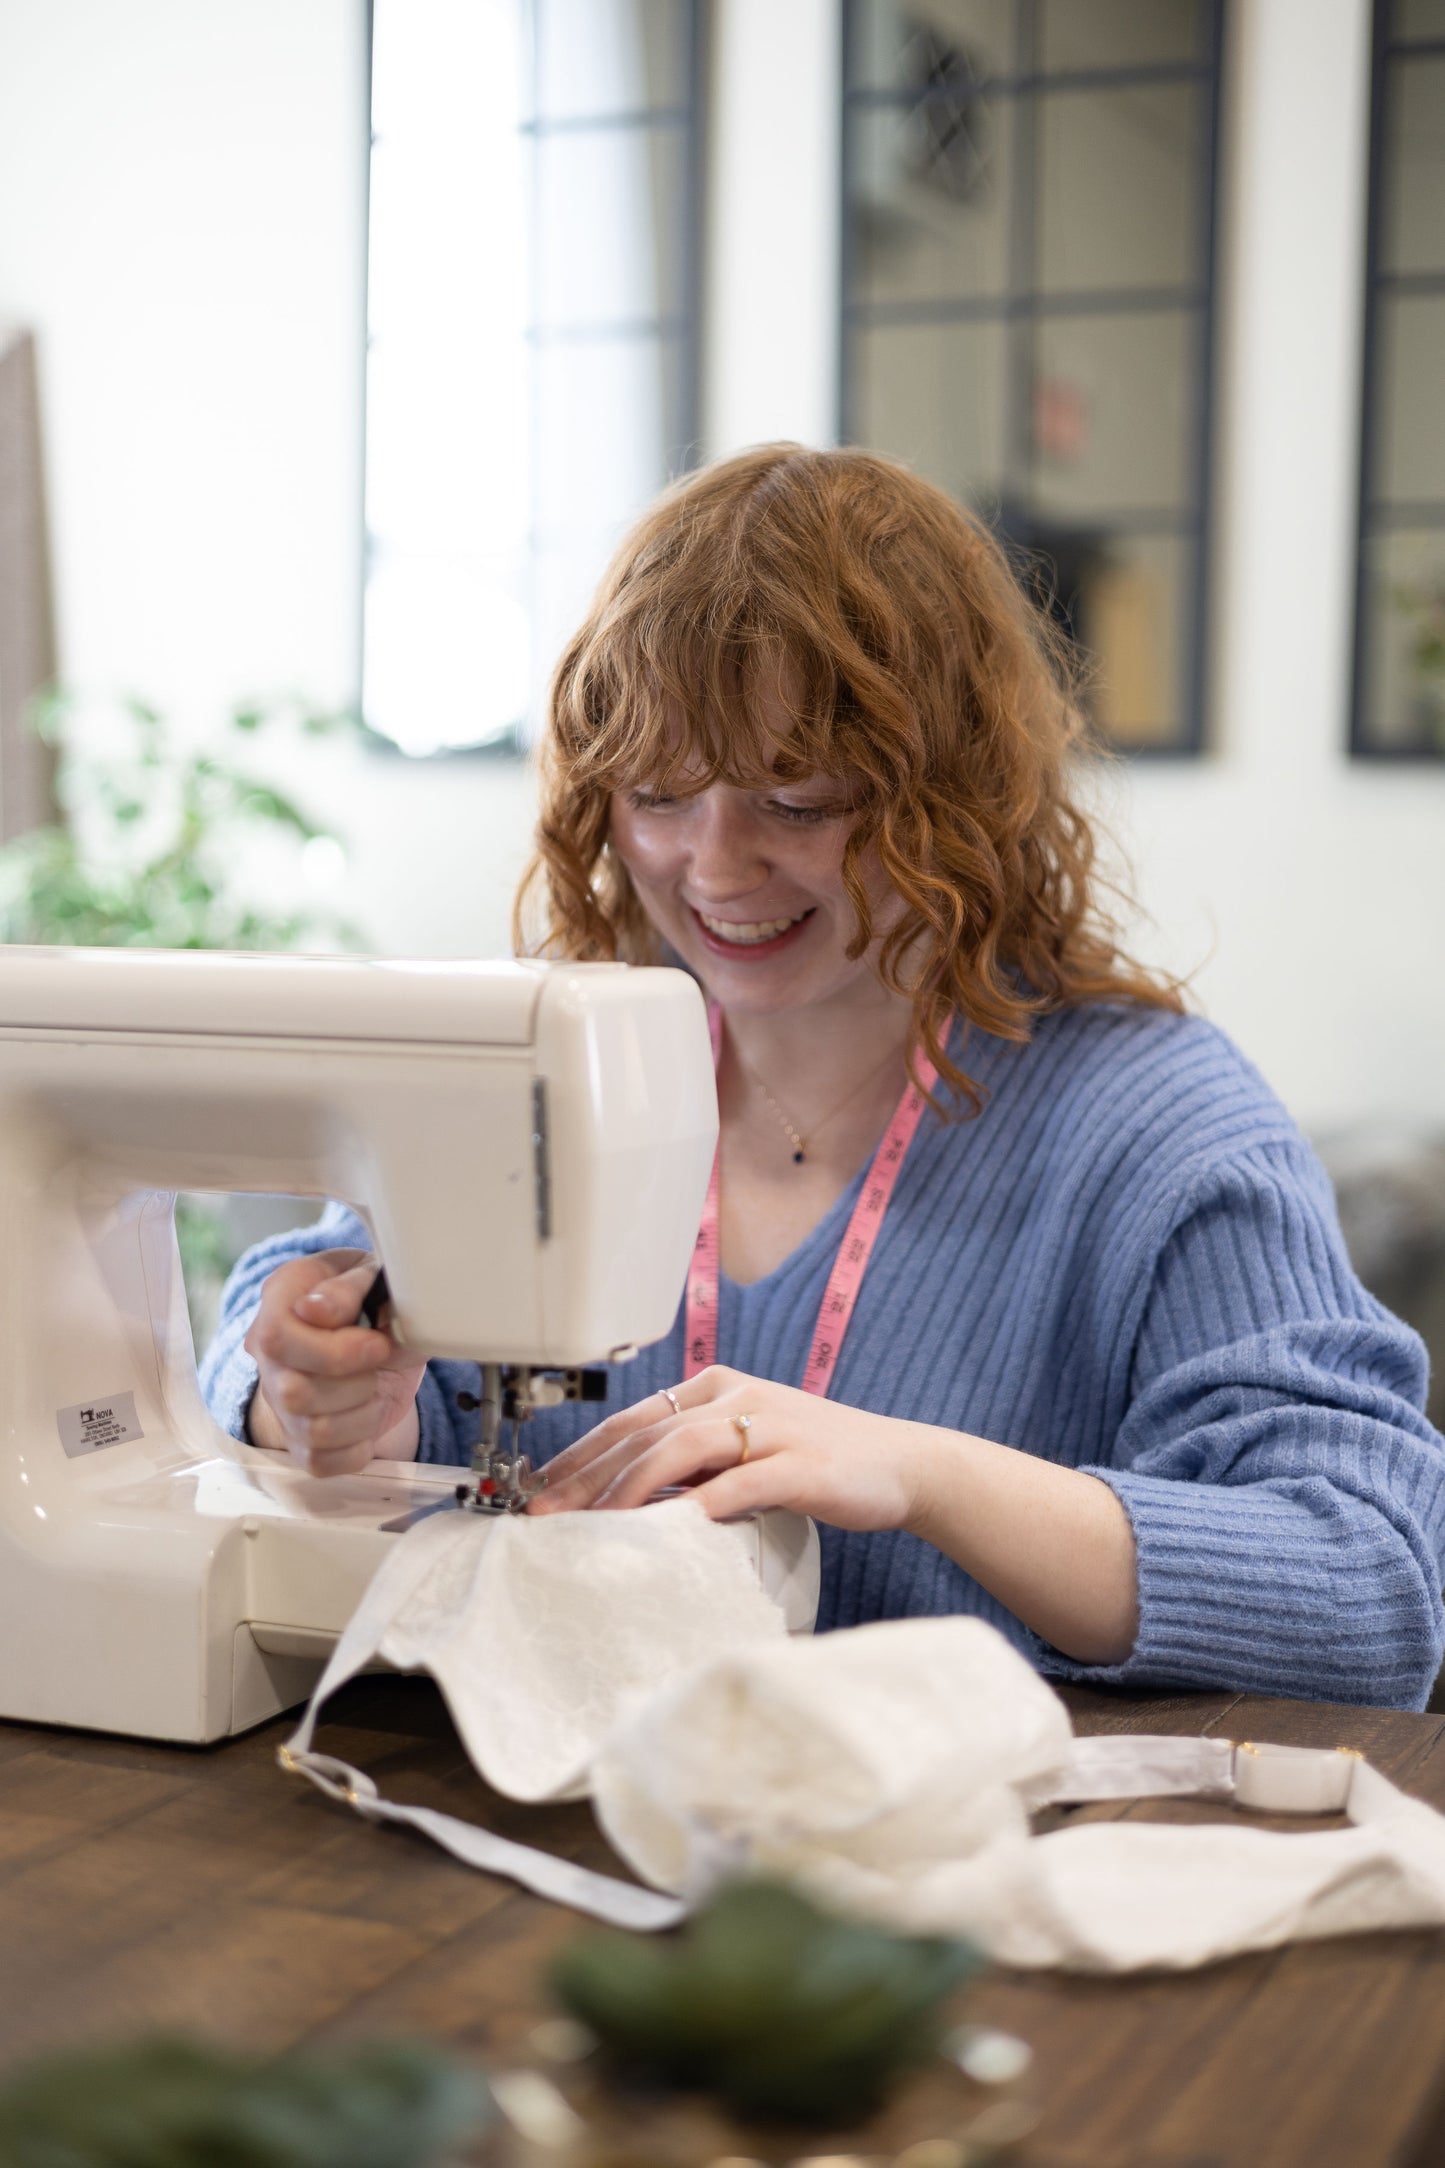 Bra Making - Women's Intimates Sewing Class